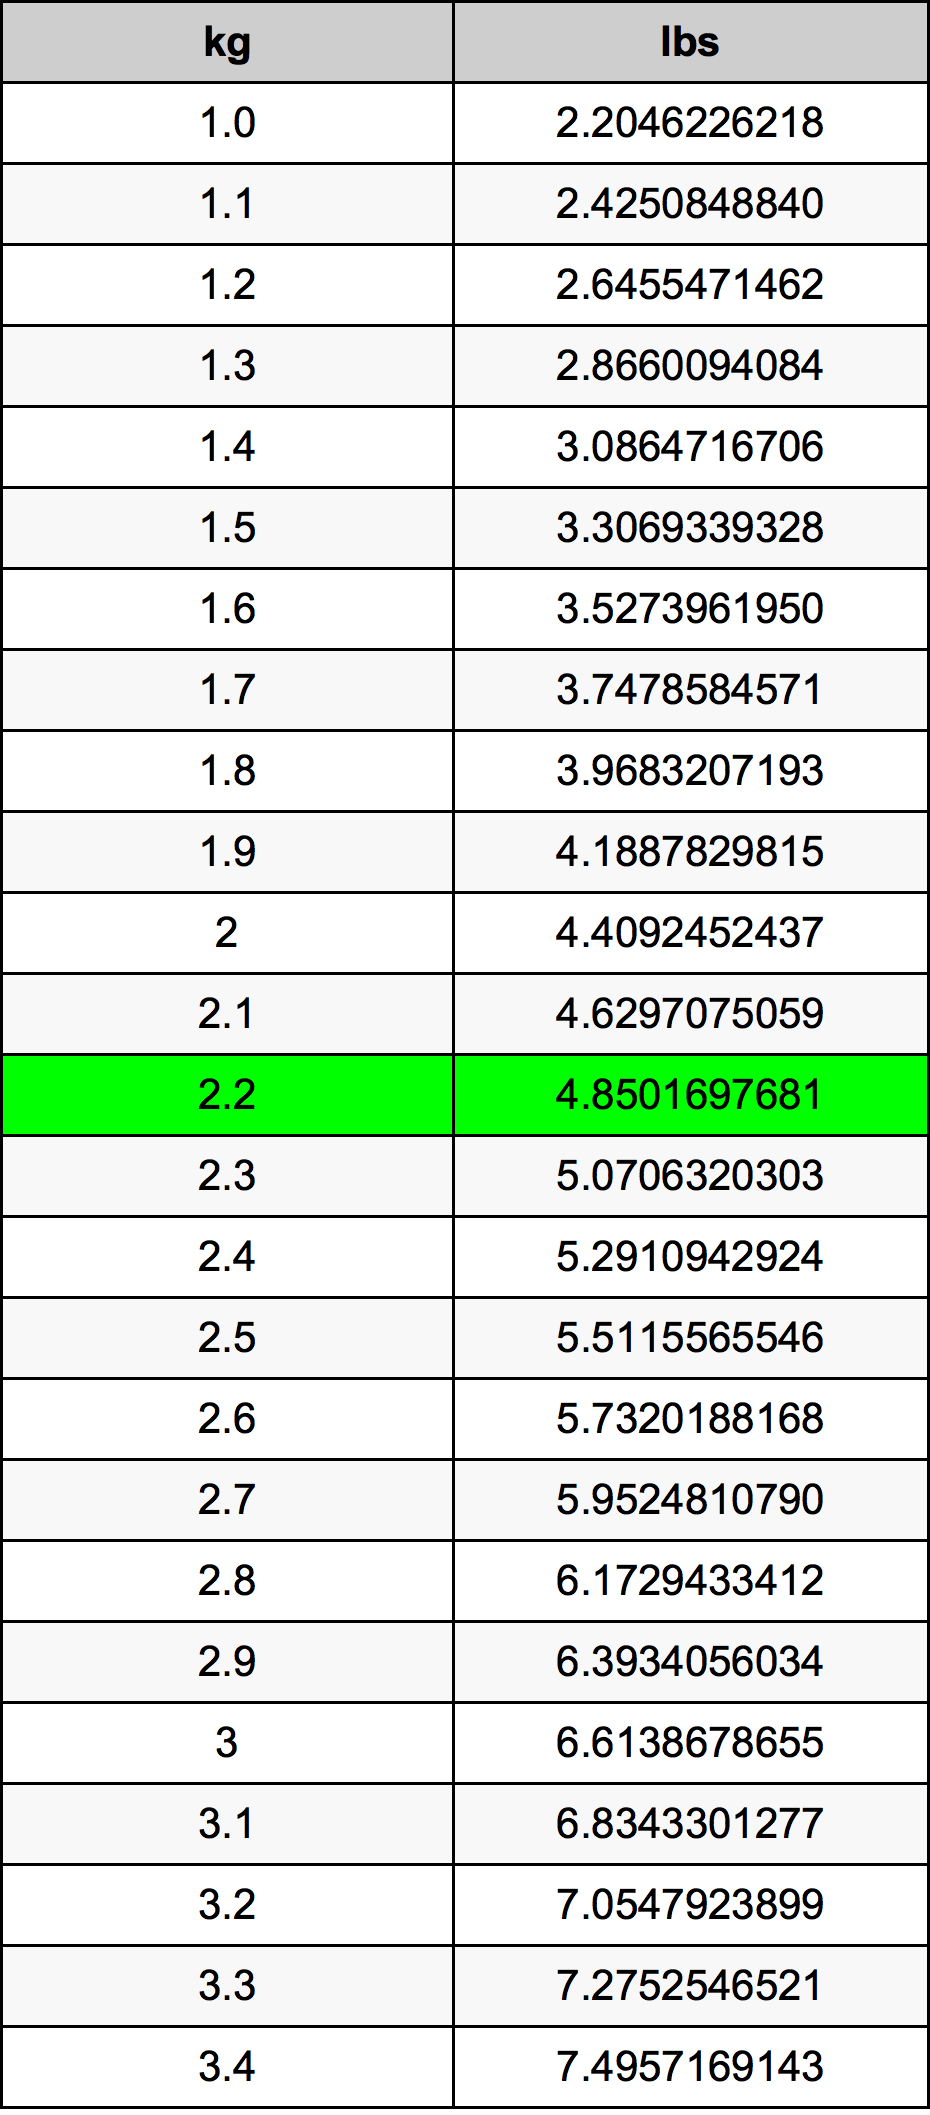 2.2 Kilogramma konverżjoni tabella